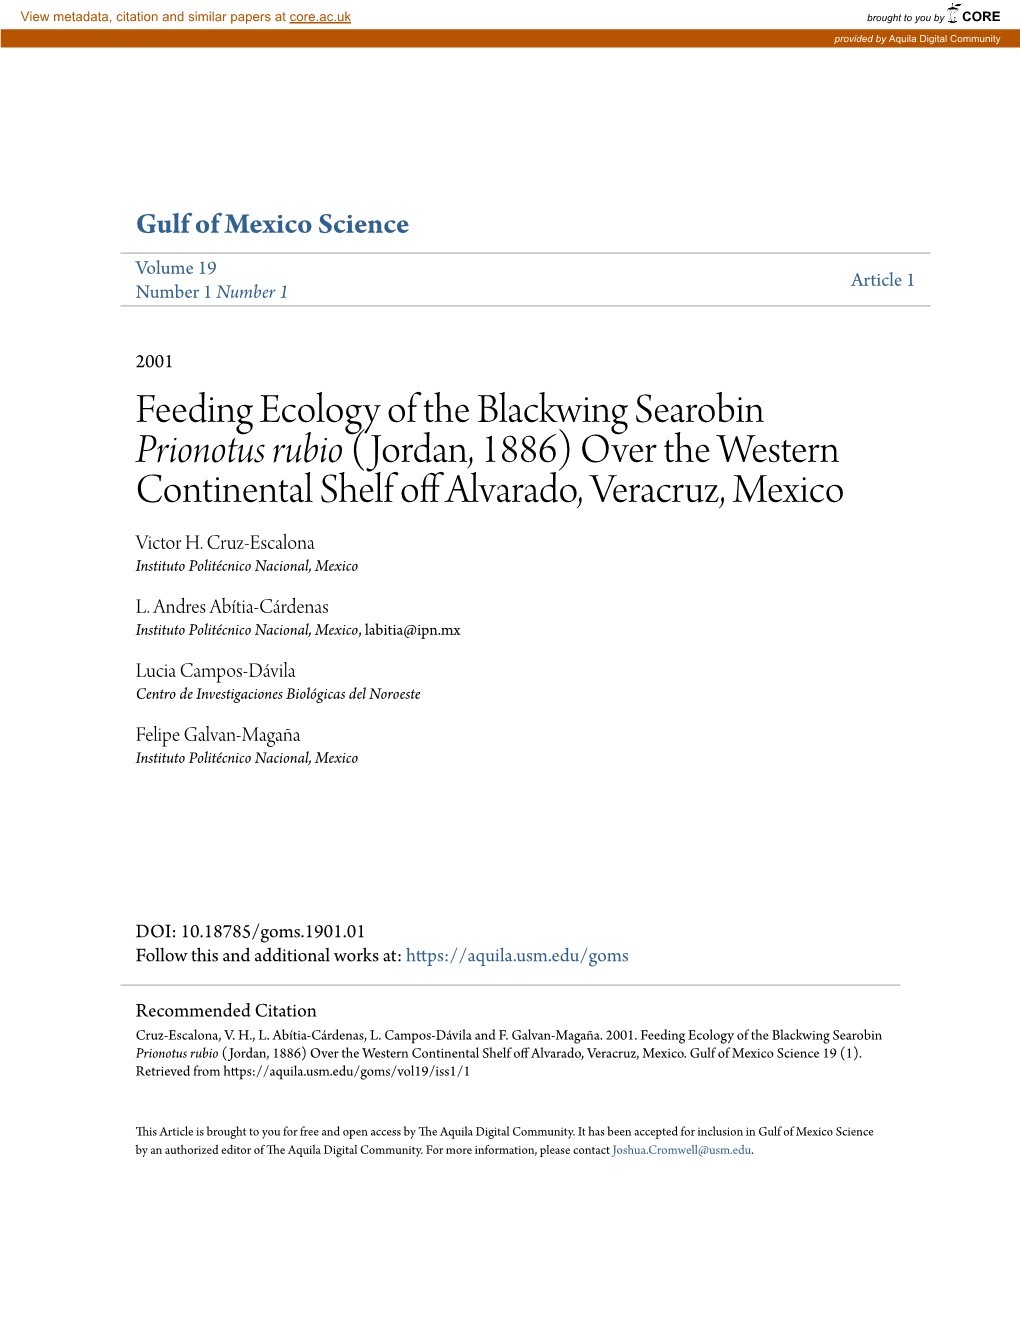 Feeding Ecology of the Blackwing Searobin Prionotus Rubio (Jordan, 1886) Over the Western Continental Shelf Off Alvarado, Veracruz, Mexico Victor H